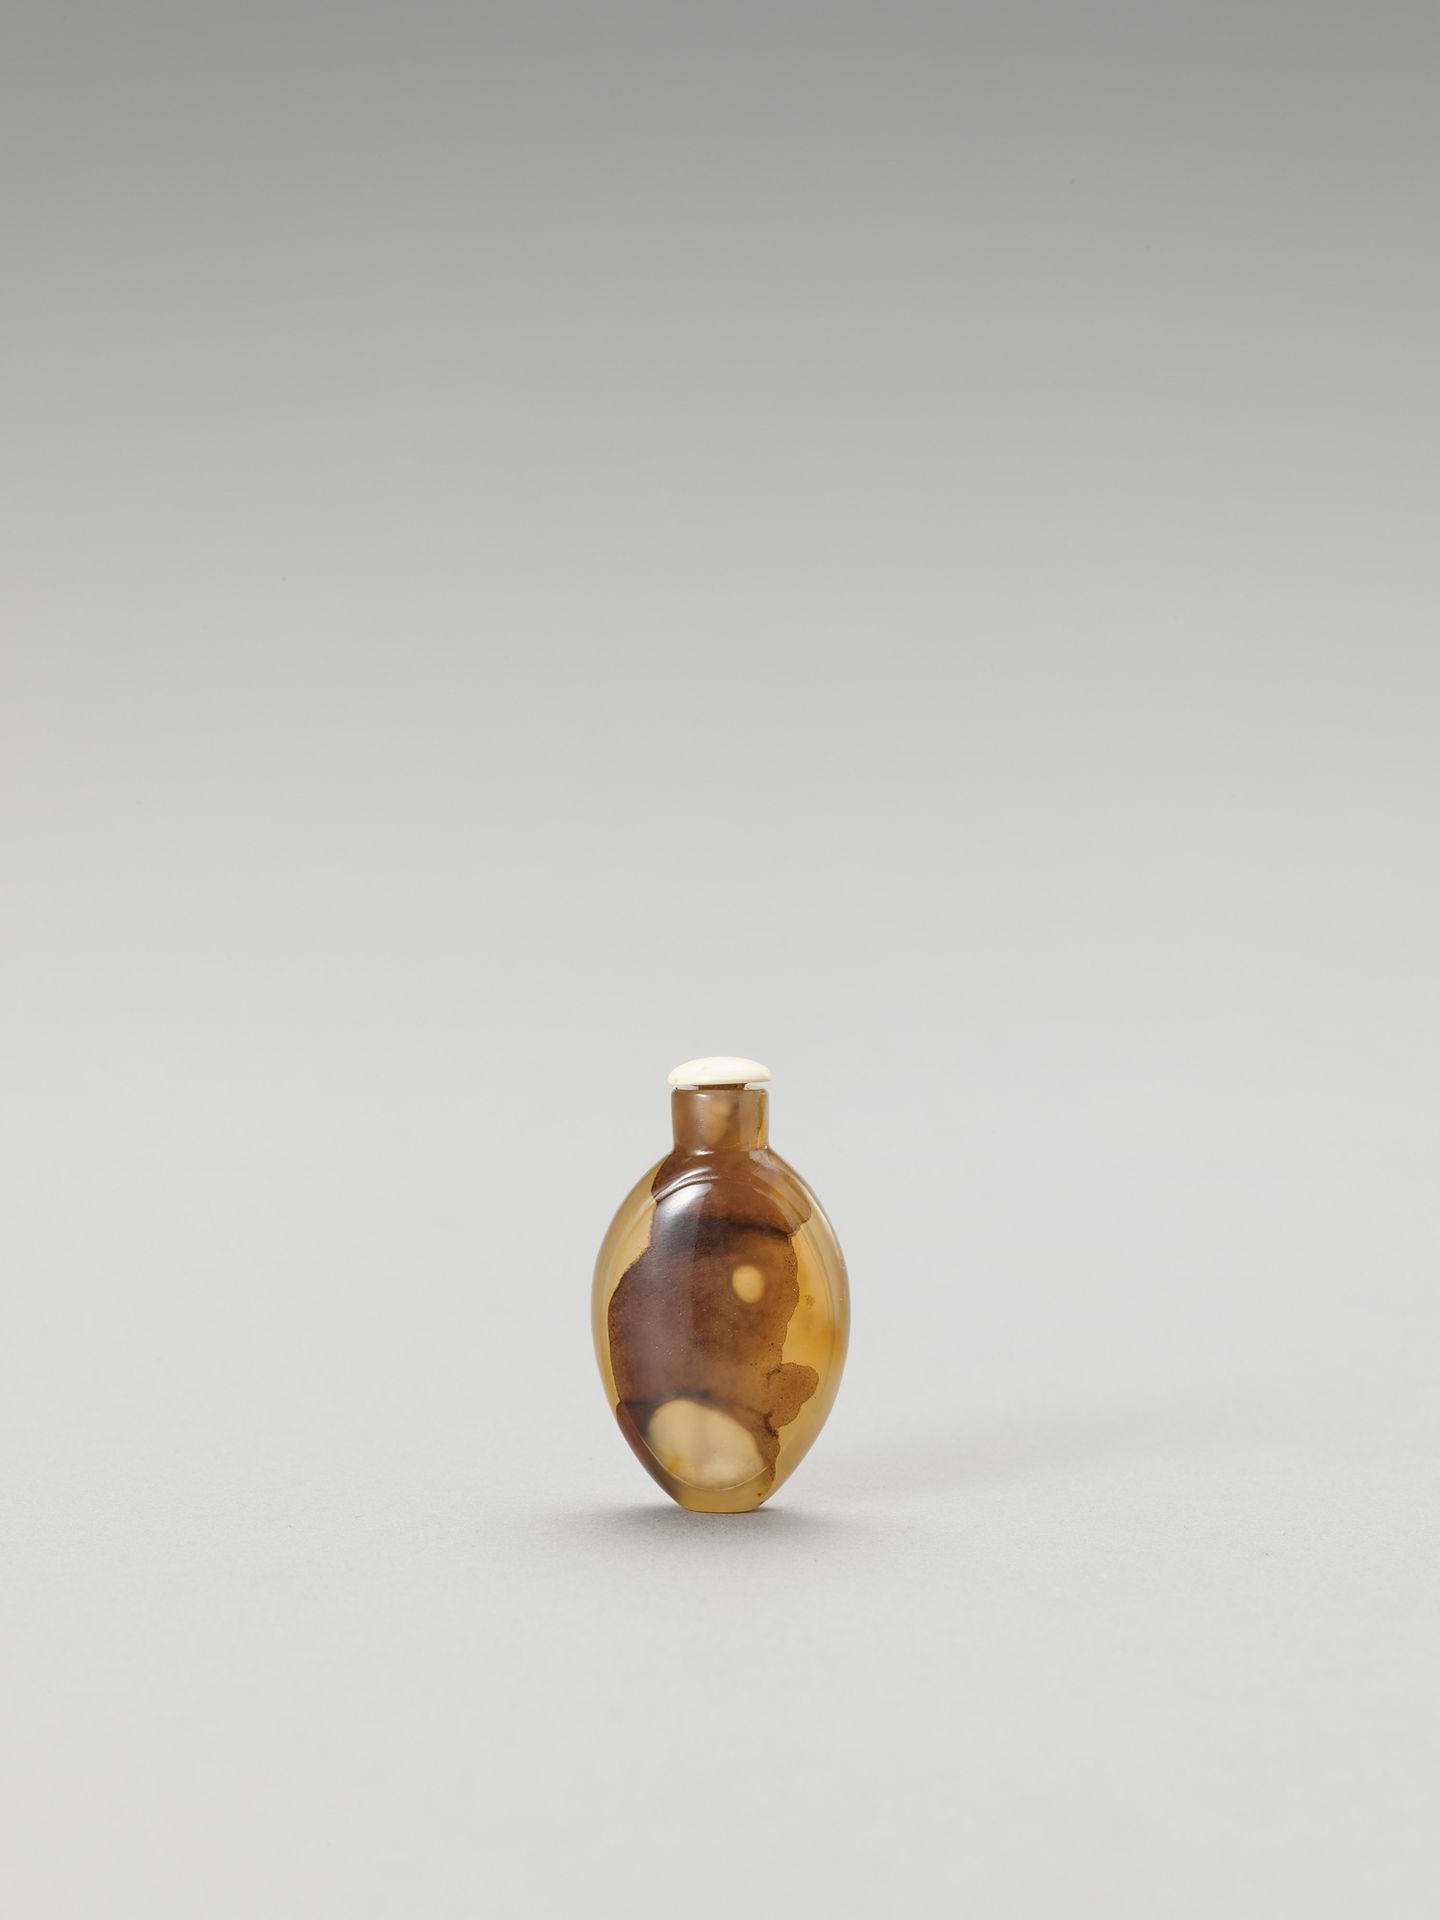 AN AGATE LADIES SNUFF BOTTLE AGATE LADIES SNUFF BOTTLE
中国，19世纪。小的拉长的卵形瓶，美丽的半透明的焦&hellip;